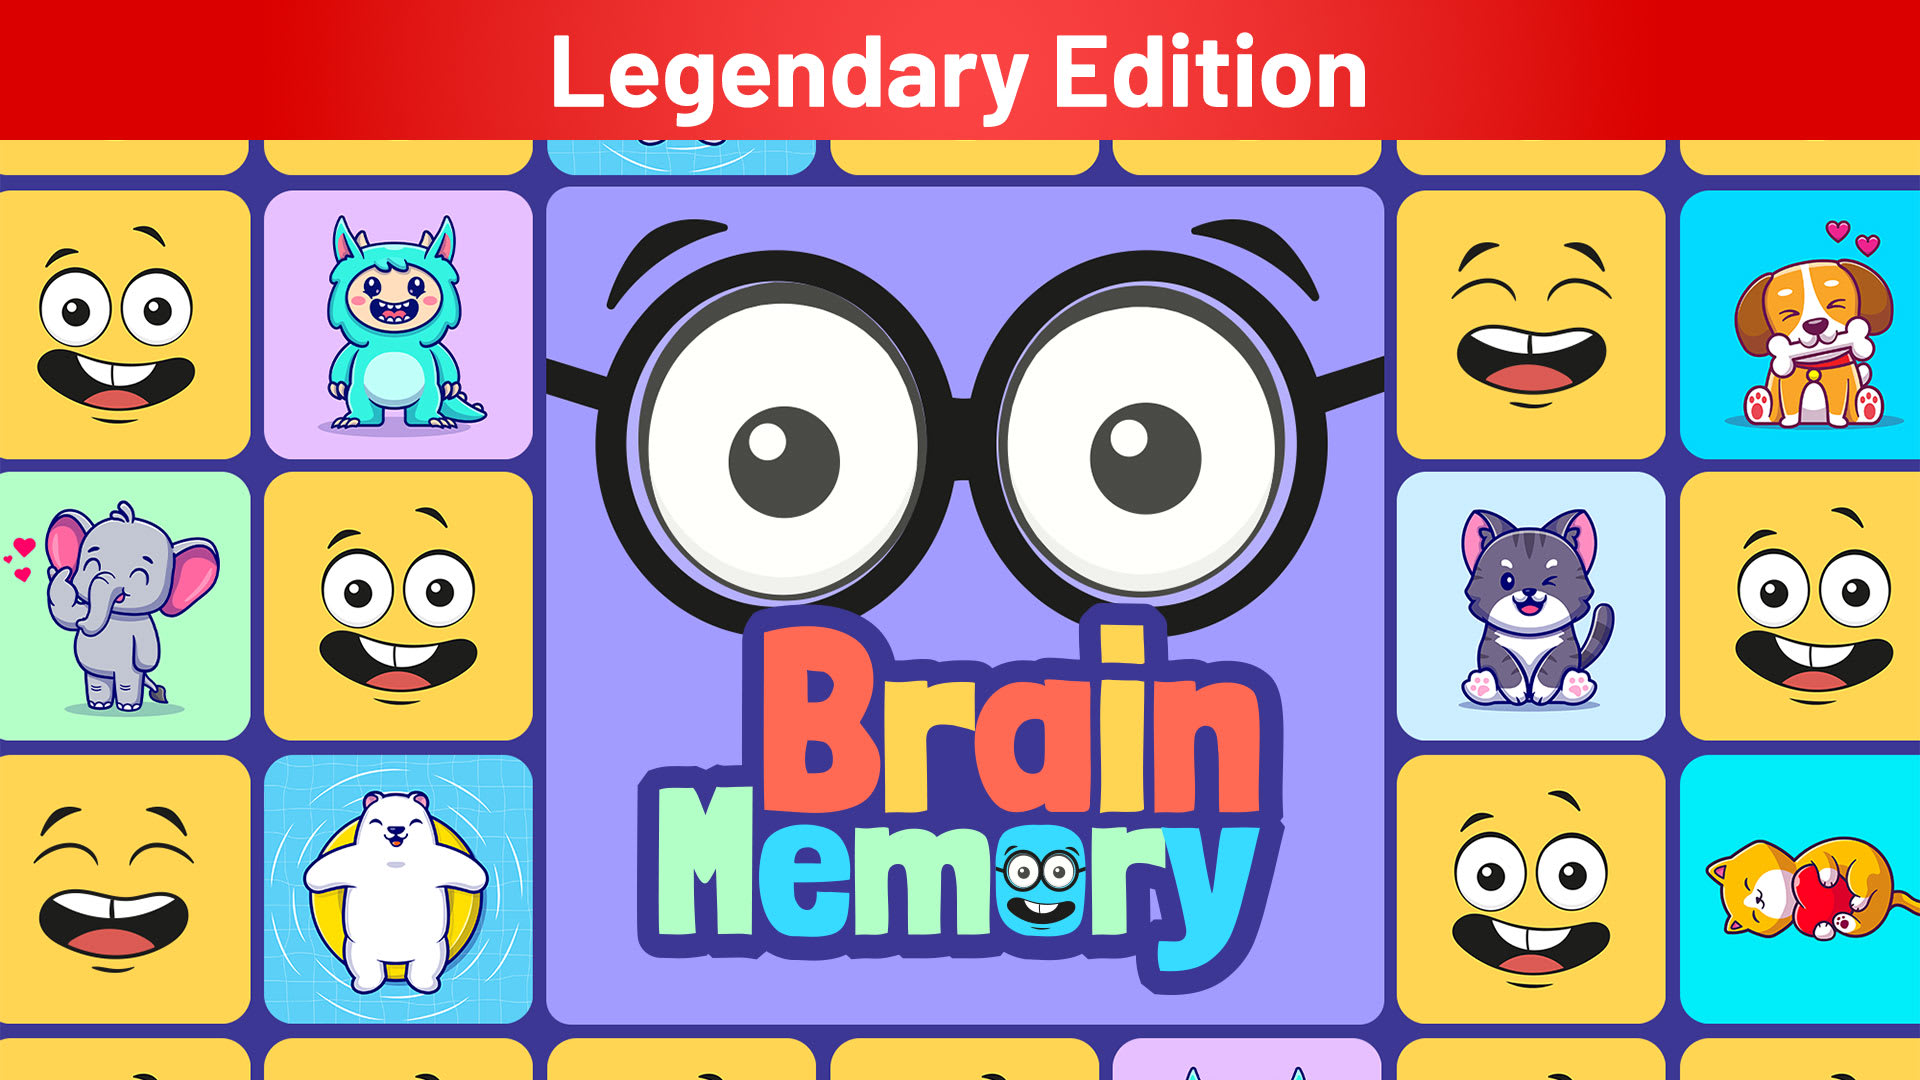 Brain Memory Legendary Edition